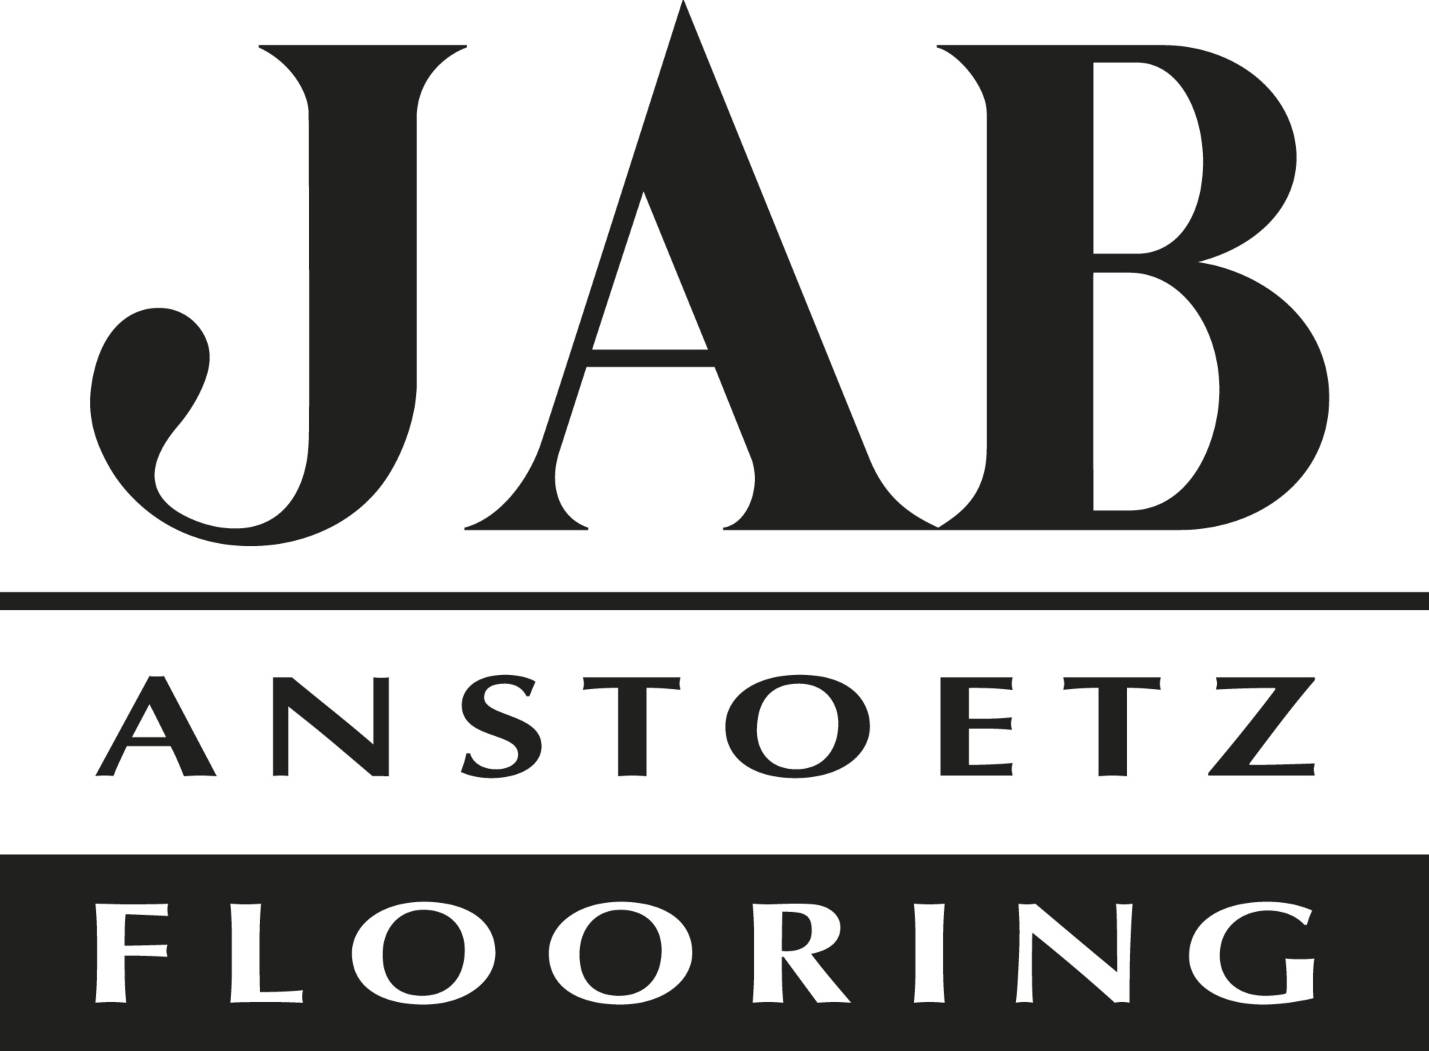 JAB_Anstoetz_Flooring-CarpetCompanyHamburg-Teppichboden-Teppich-Bodenbelag-LVT-Designboden-Vinylbelag